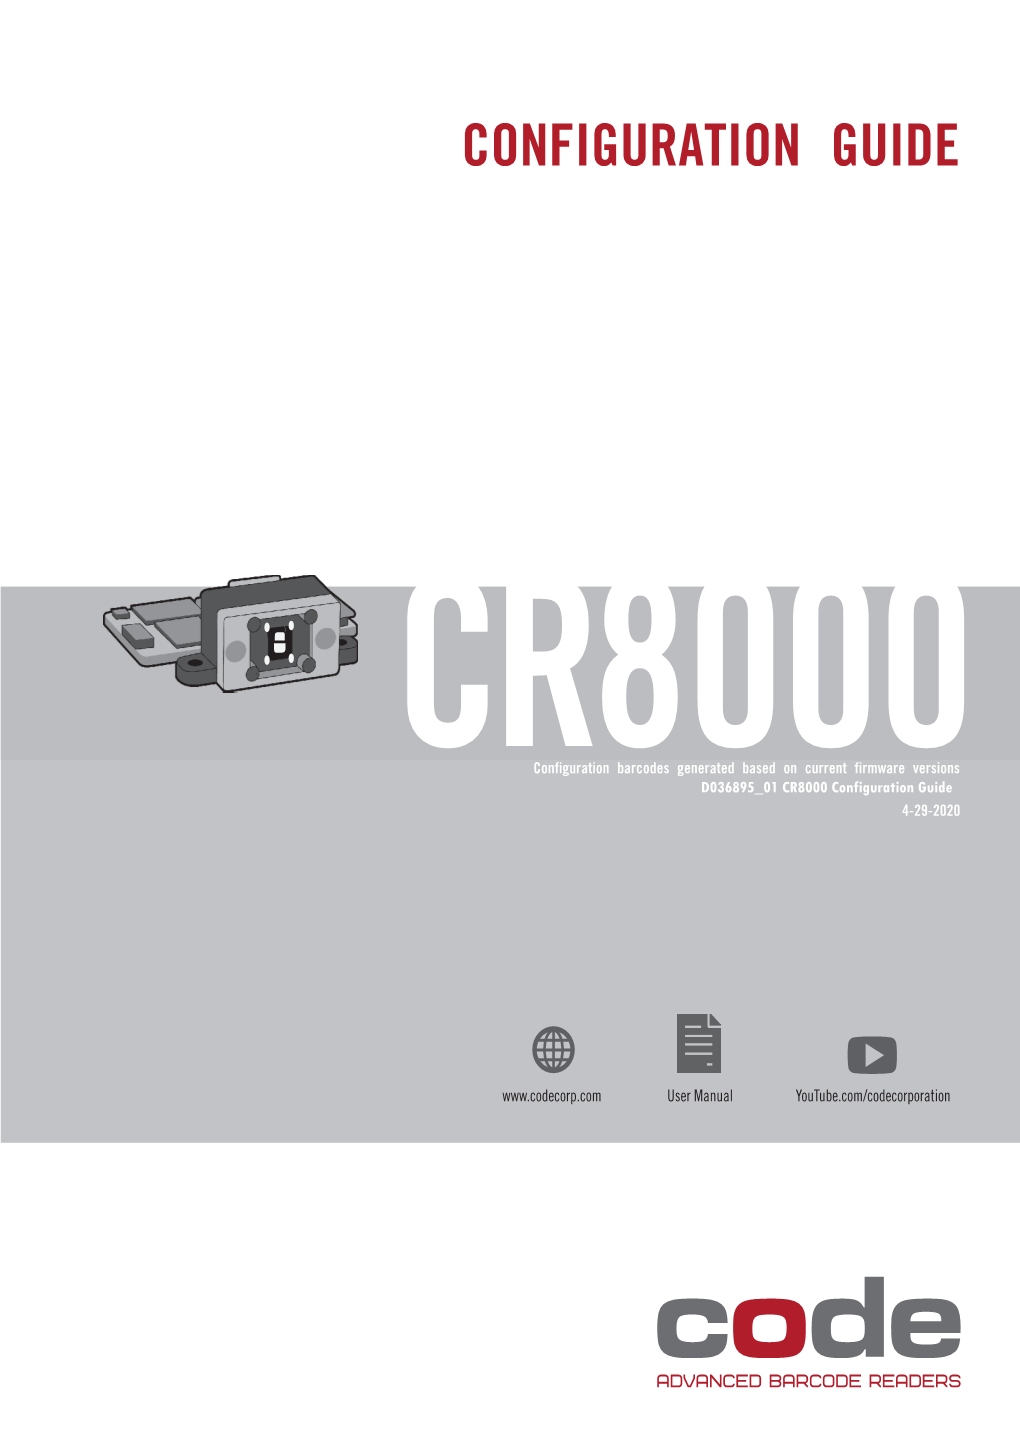 CR8000 Configuration Guide 4-29-2020